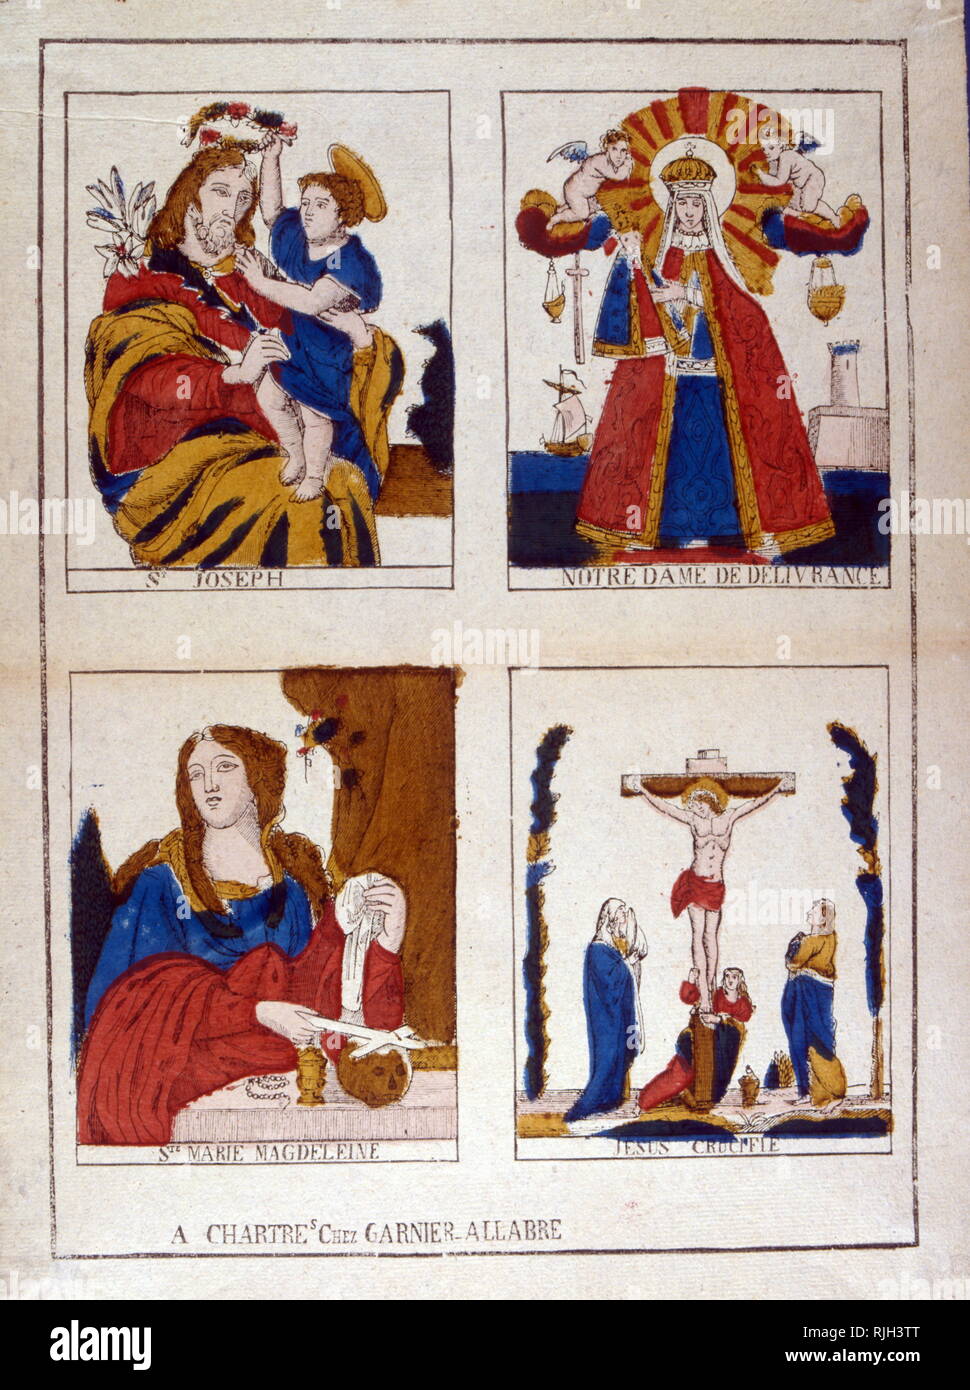 French Catholic illustrations of Saints, Joseph, Notre dame de deliverance, Mary Magdalene, Jesus crucified. 1860 Stock Photo